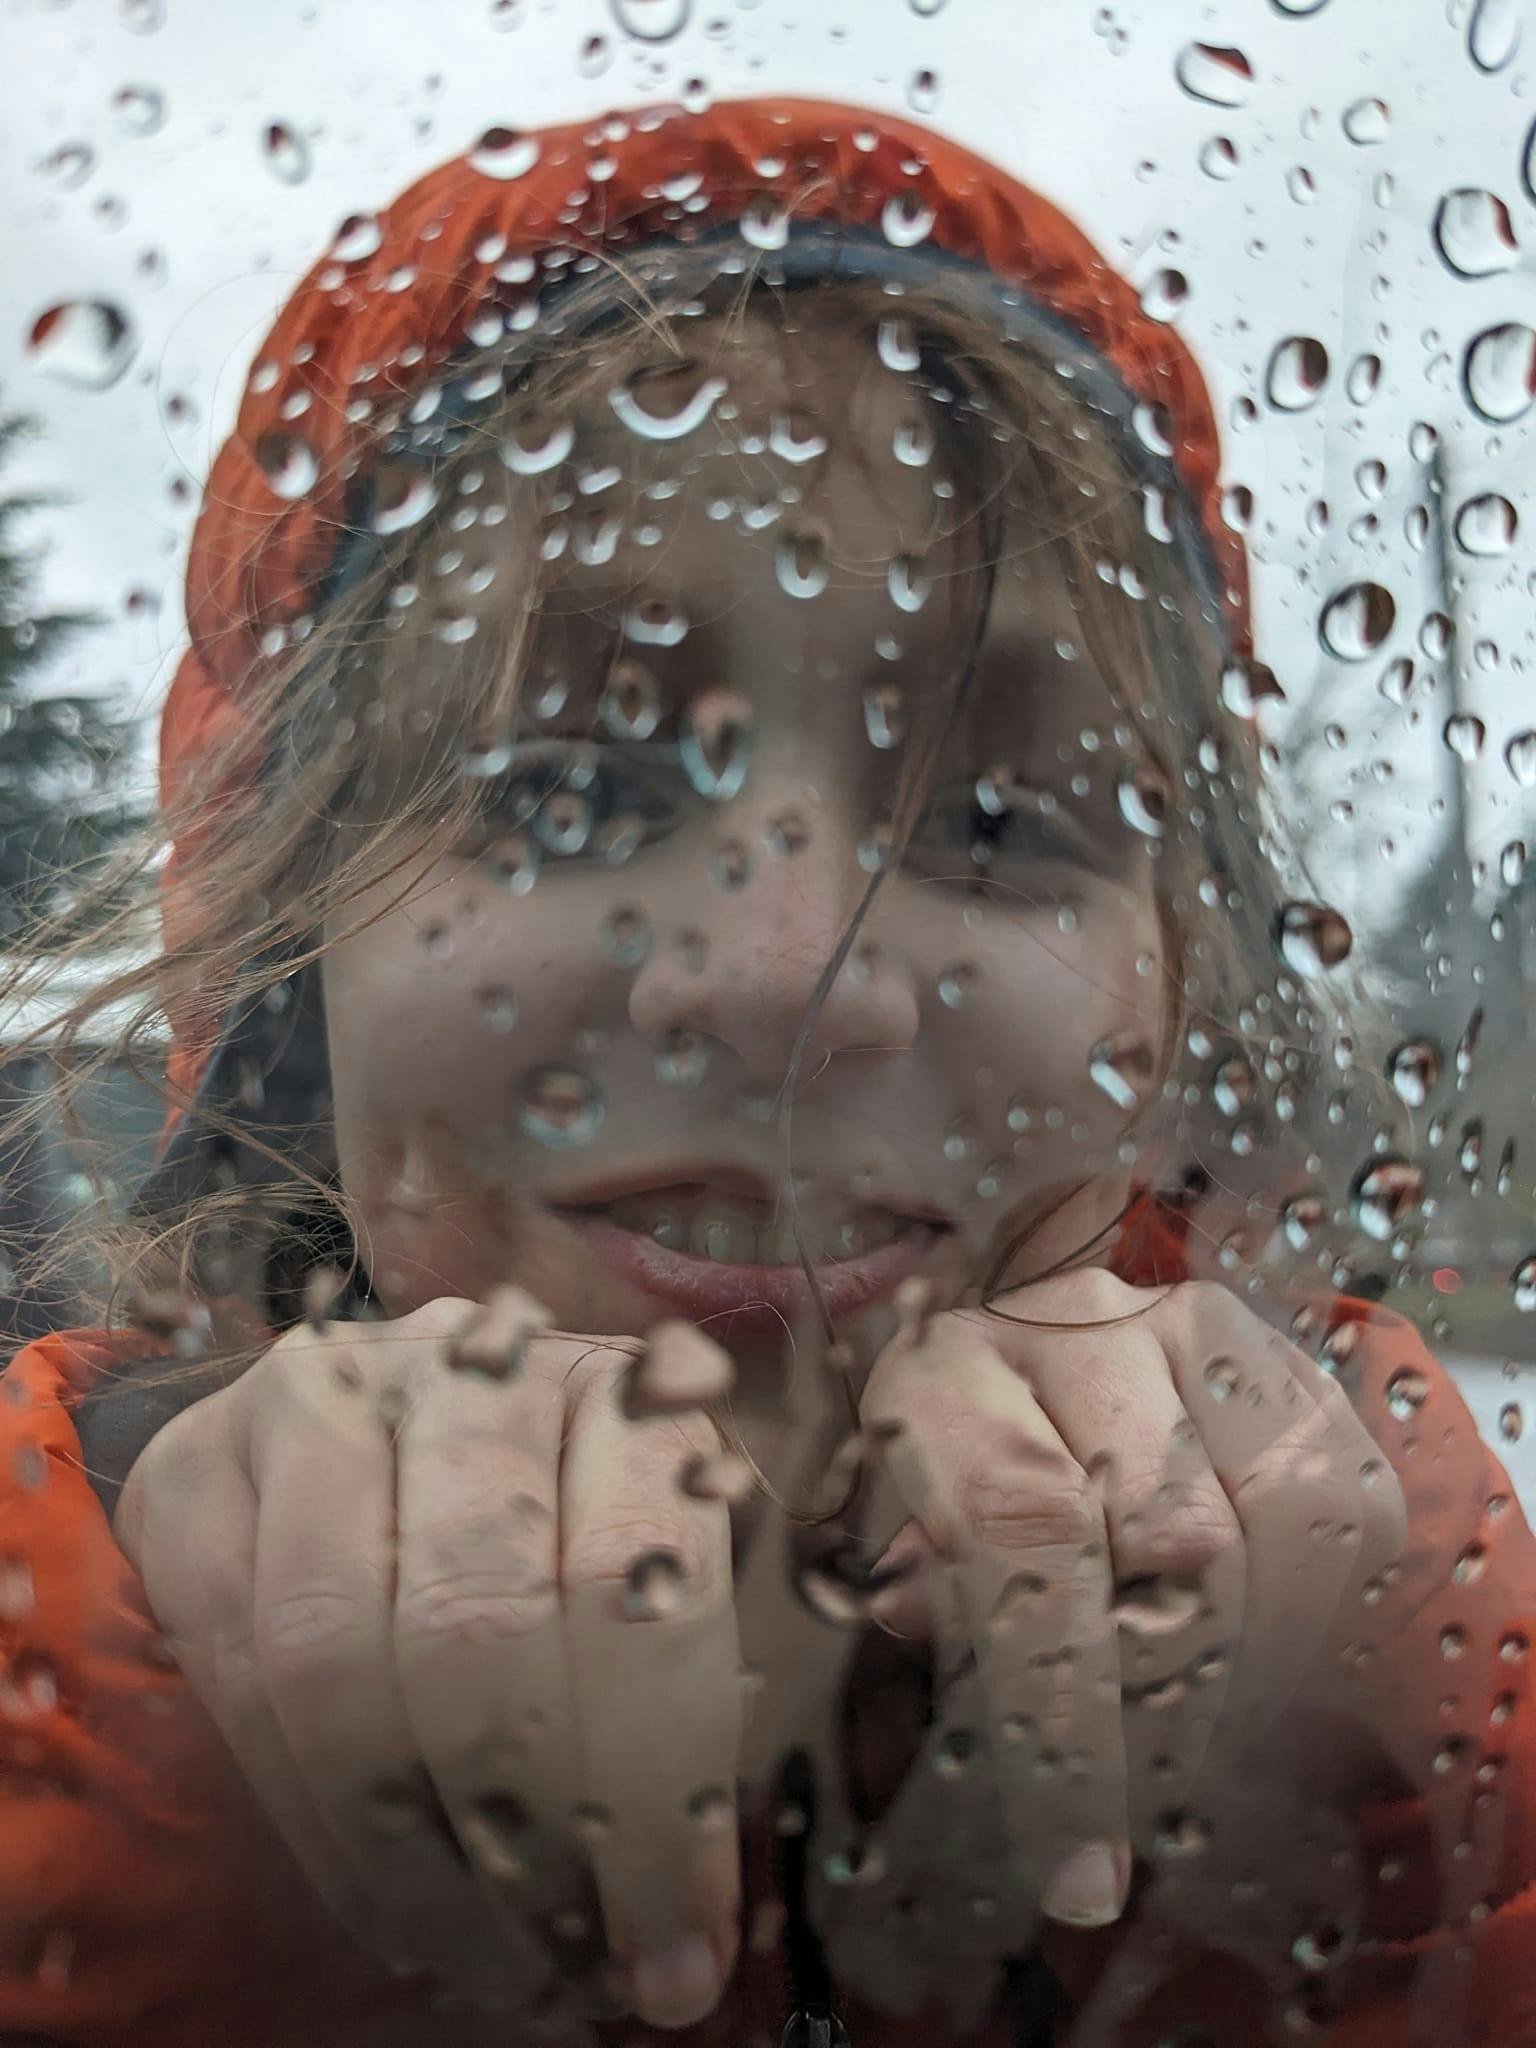 Child looking through a rainy window, wearing an orange coat.